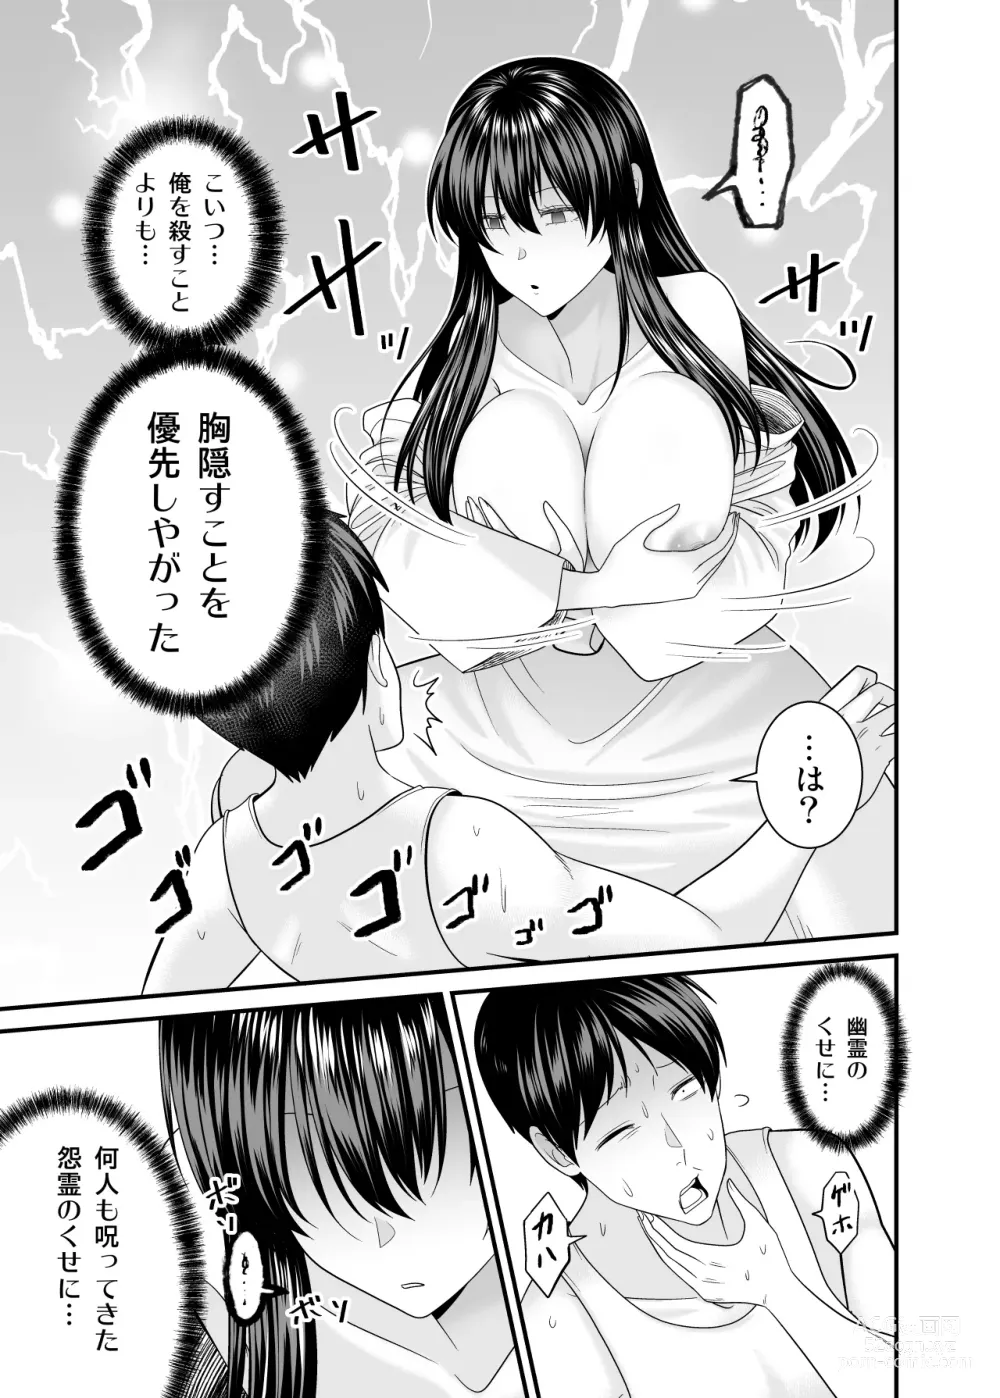 Page 18 of doujinshi ヤバい事故物件に女幽霊が出たけど無職底辺の俺はセックスしまくる